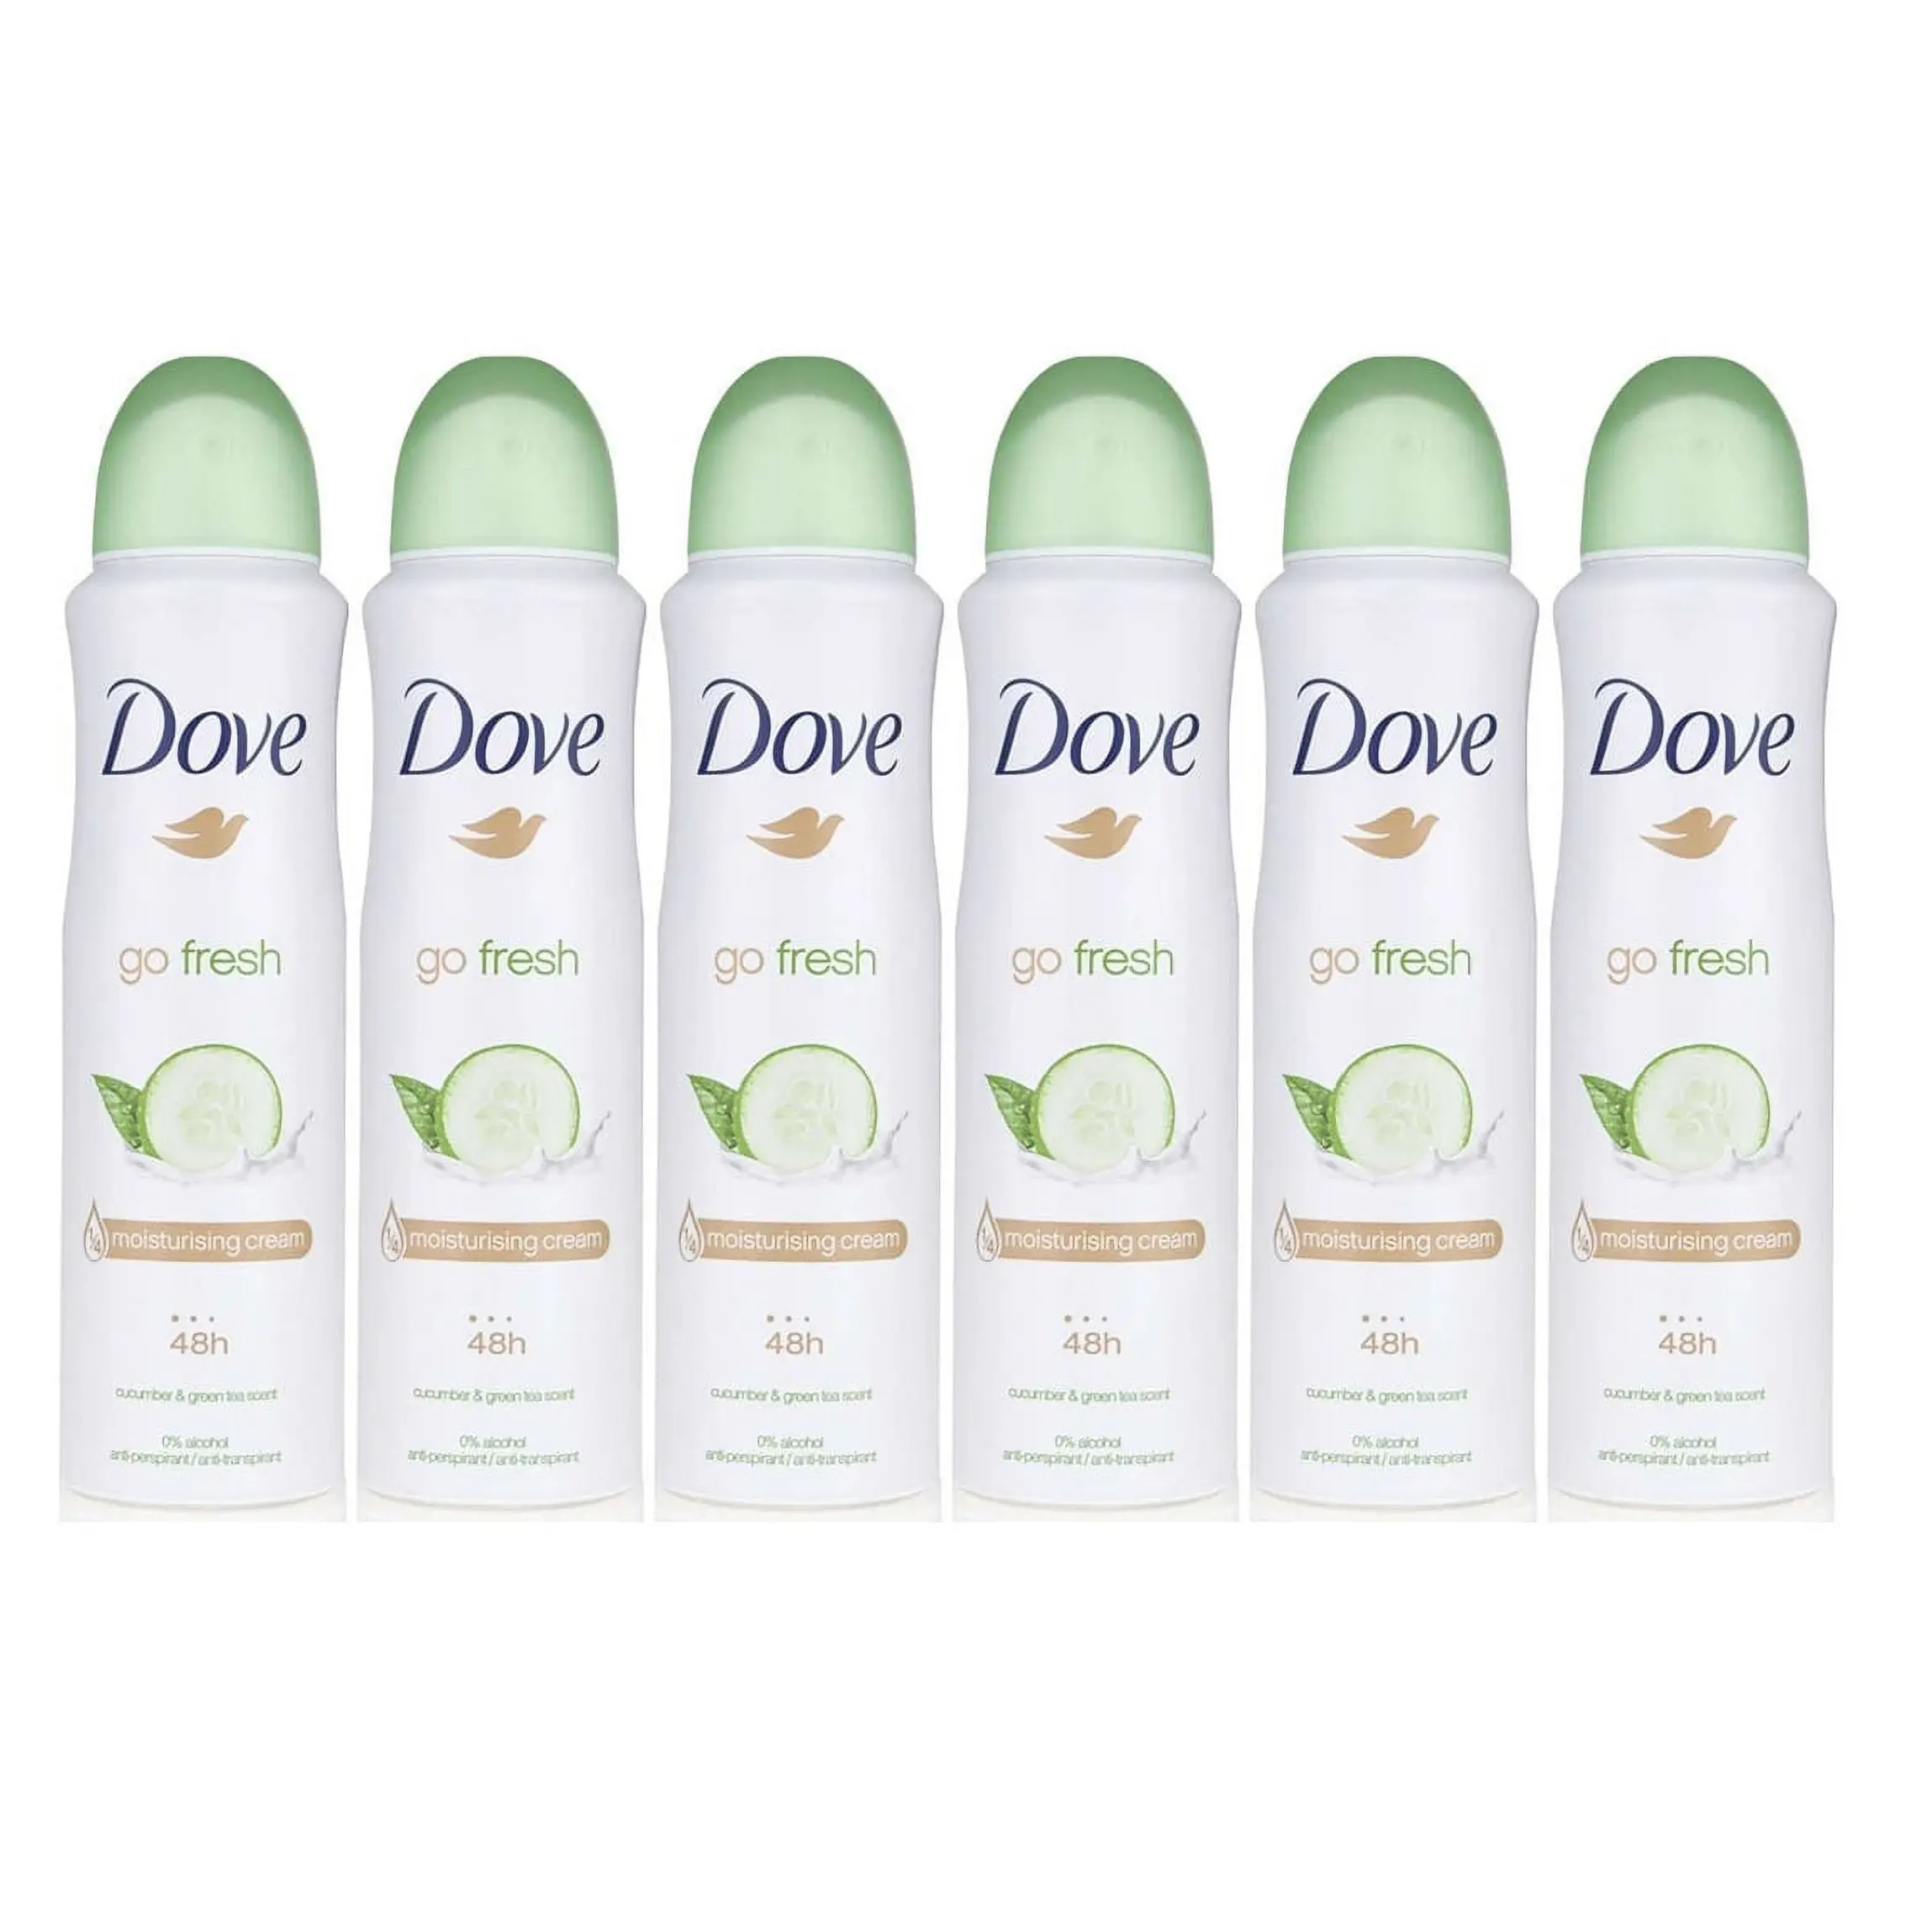 Dove Advanced Clean Comfort Antitranspirante Desodorante Aerosol desodorante spray 72h. ¡Dove Original Antitranspirante 150ml!